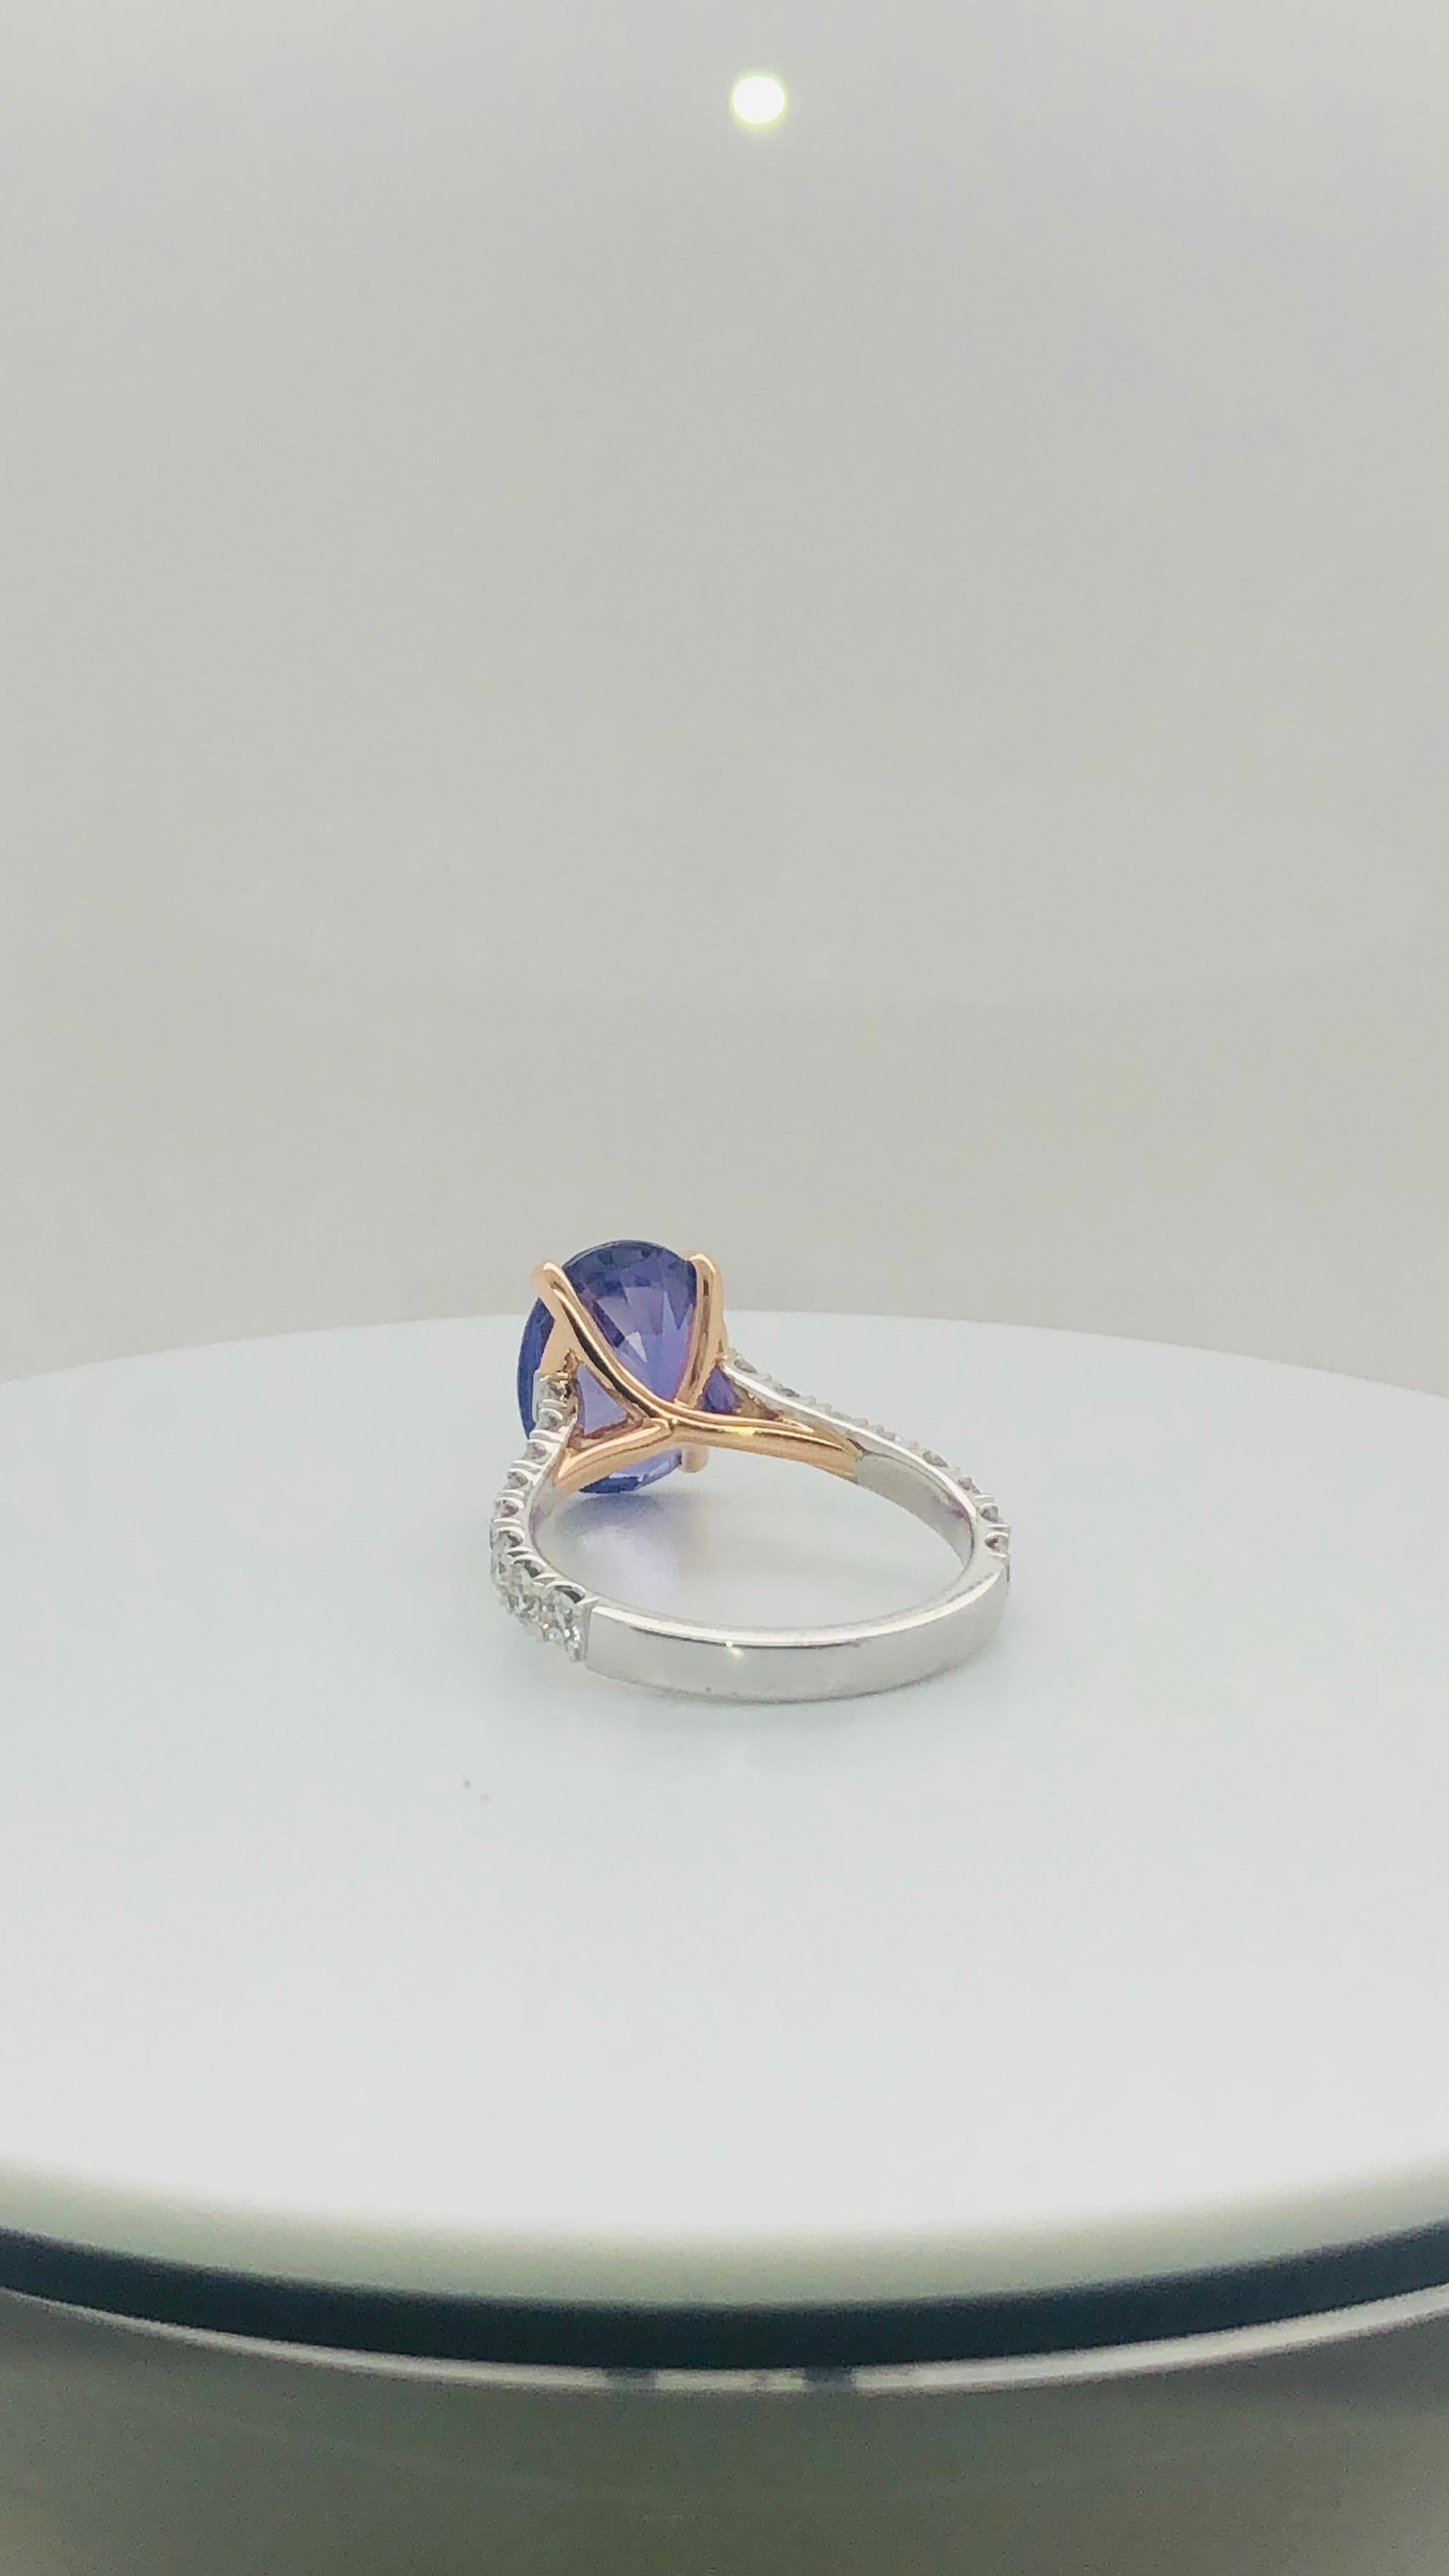 Certified Natural 5.23 Carat Sri Lankan Purple Sapphire Diamond Engagement Ring For Sale 1